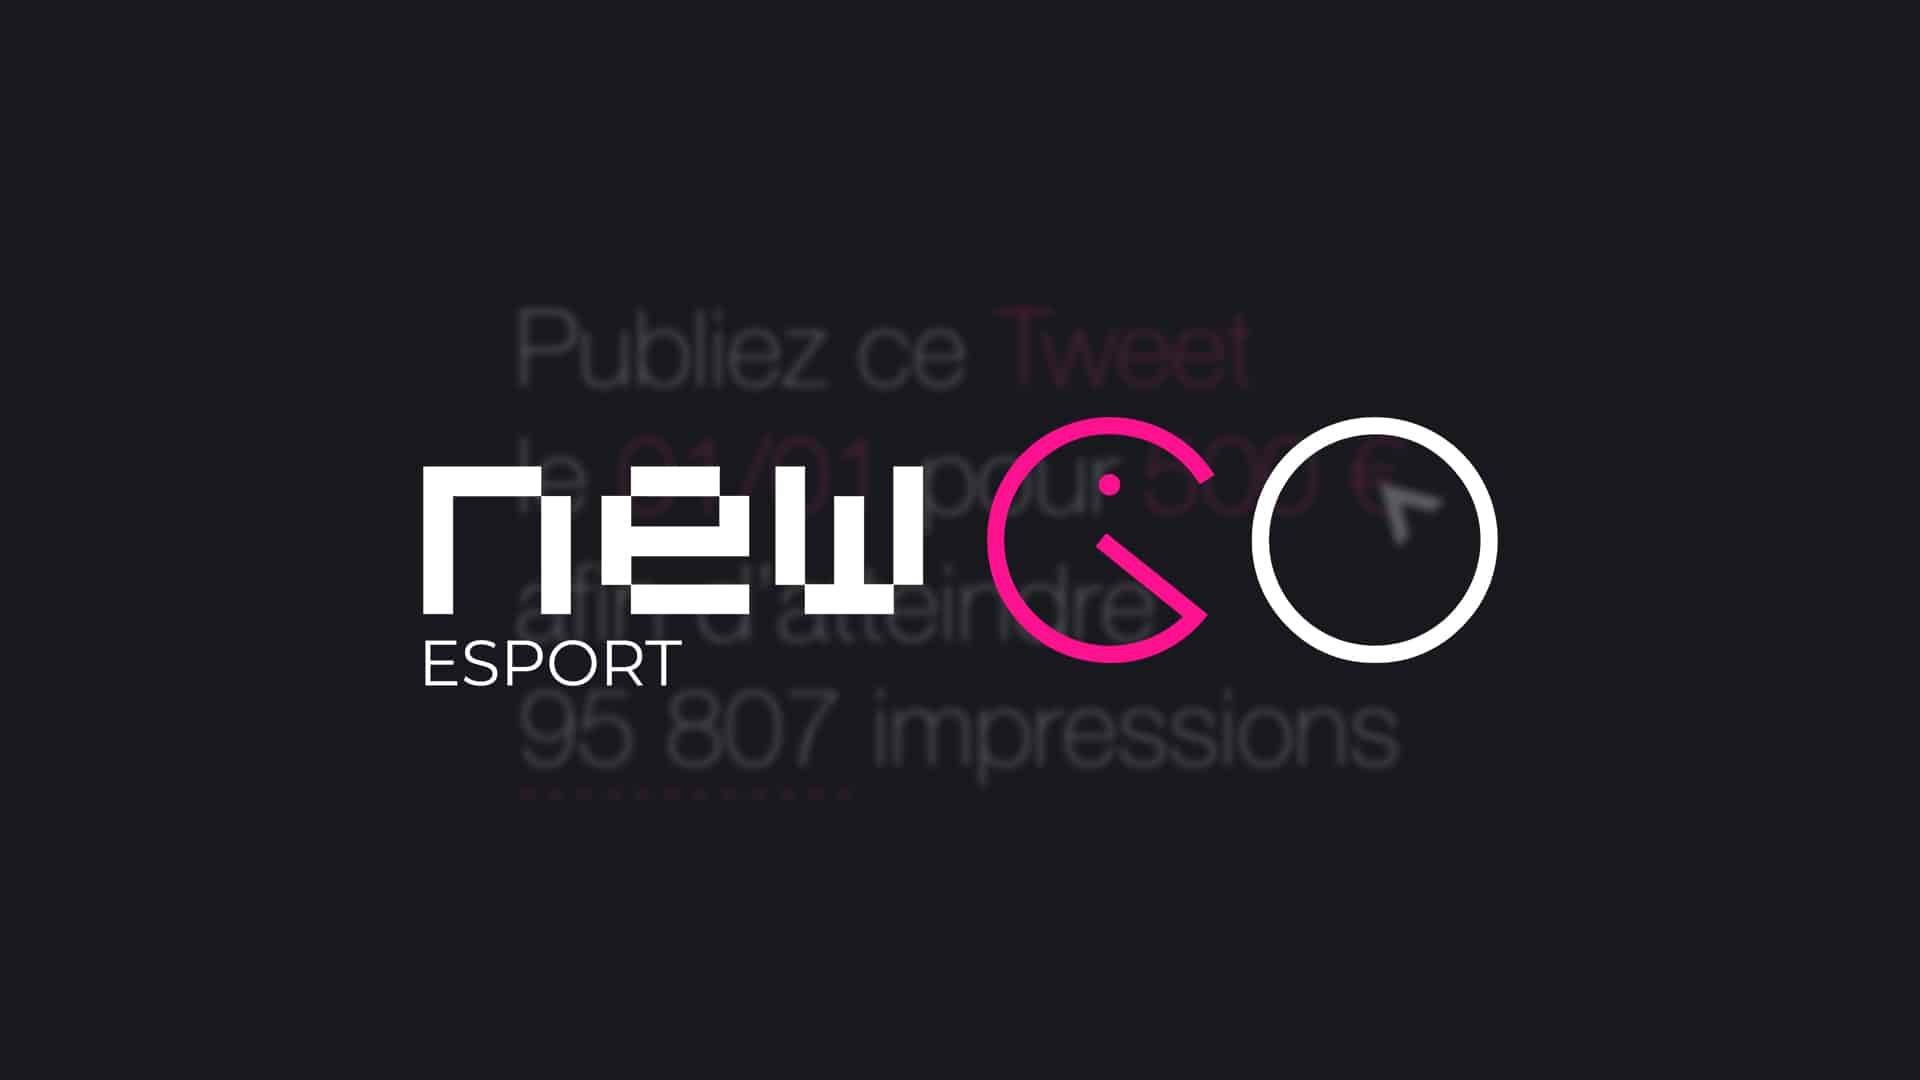 NewGo – Services presentation video